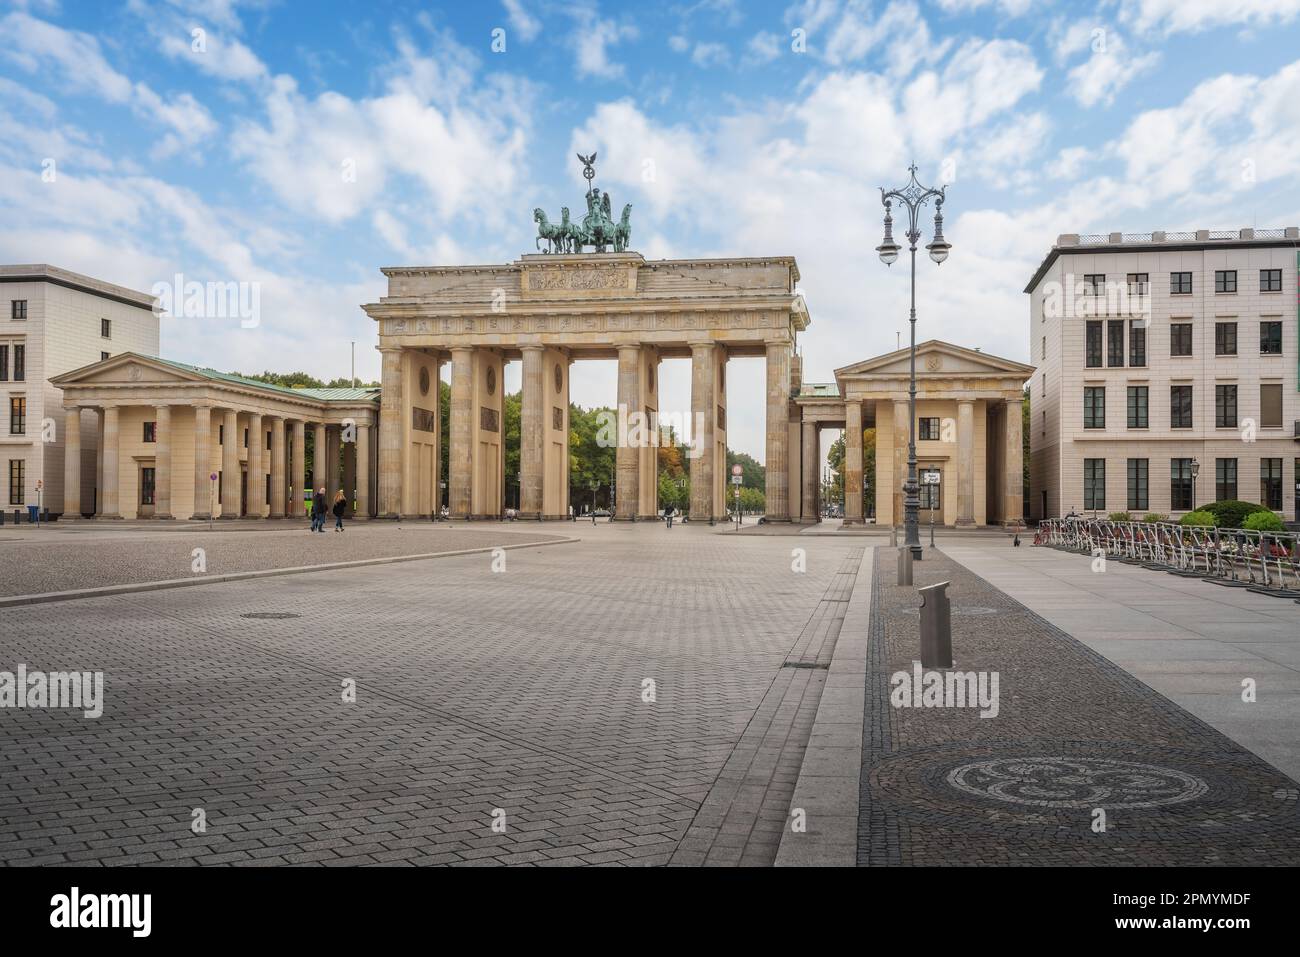 Brandenburg Gate at Pariser Platz - Berlin, Germany Stock Photo